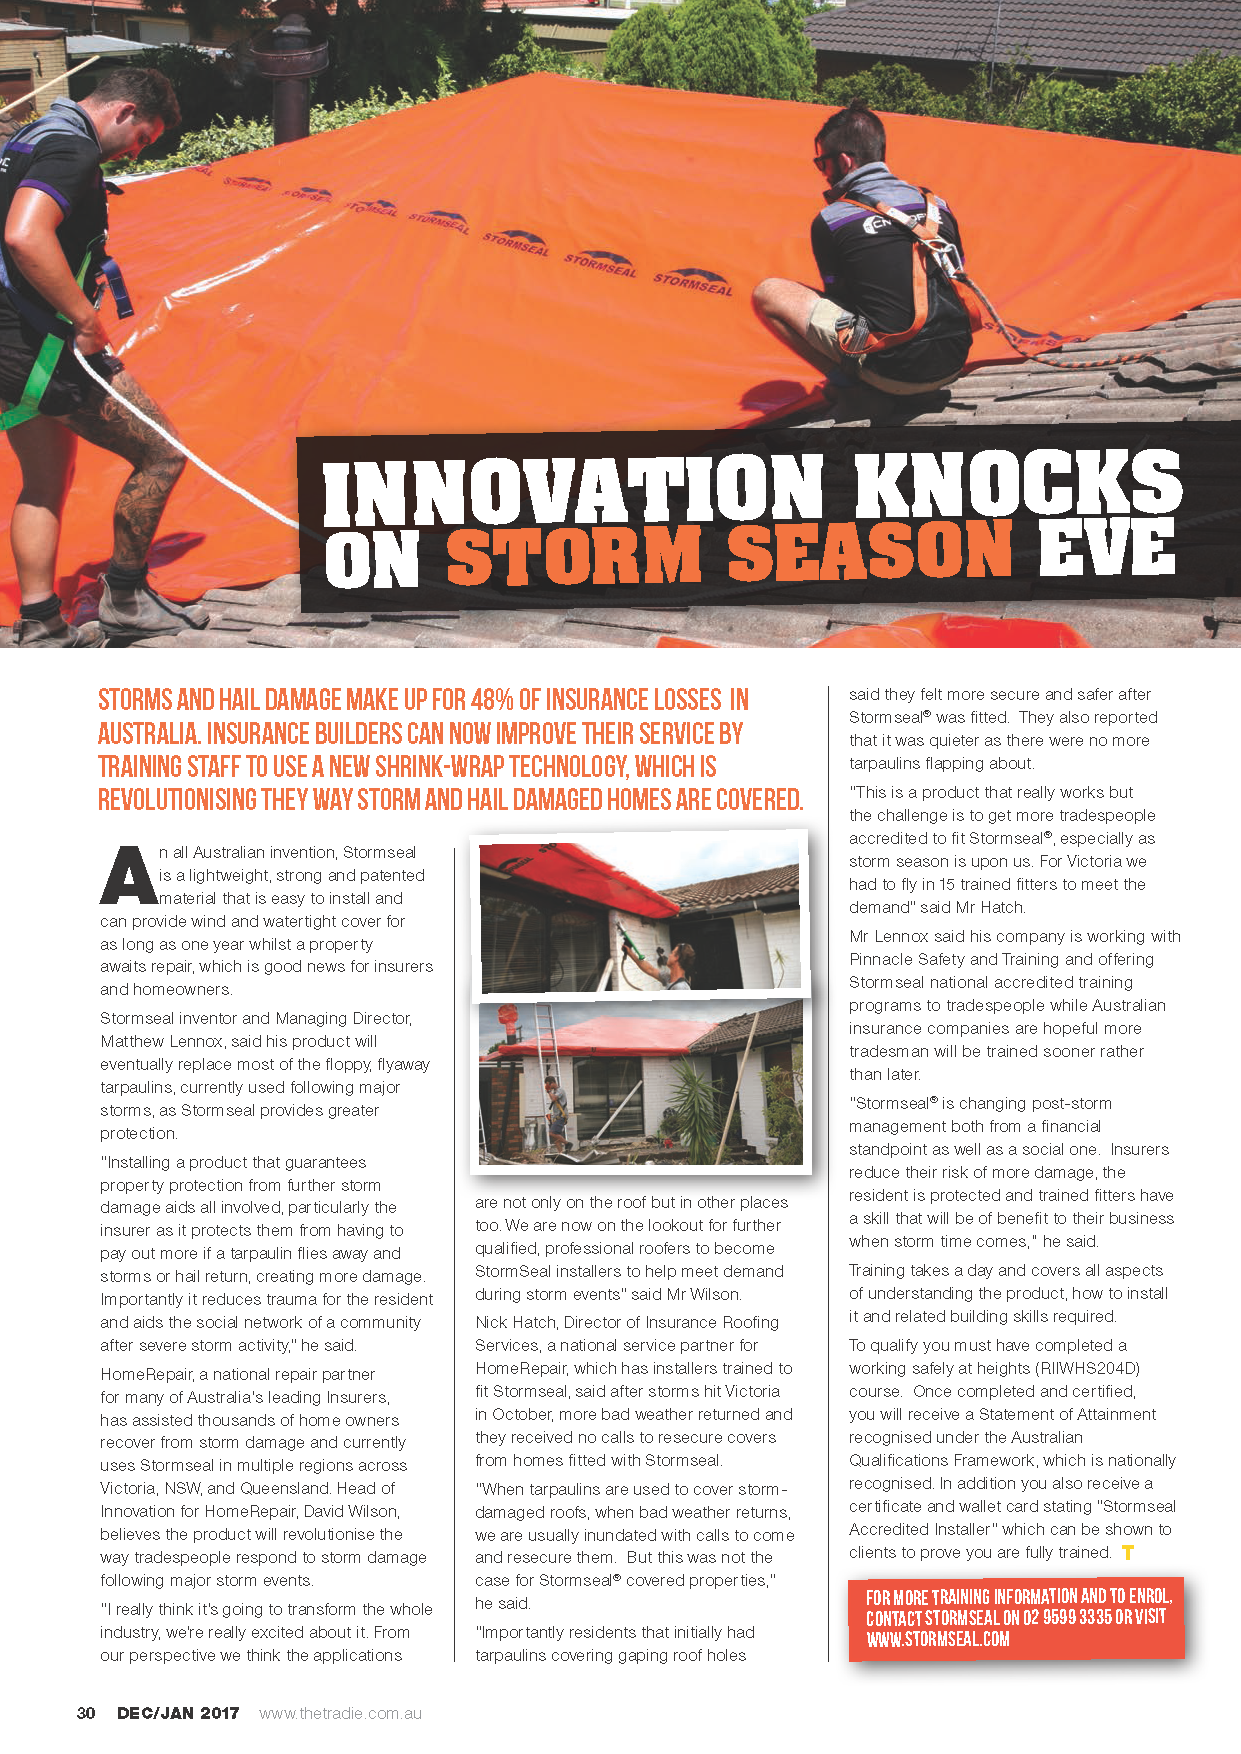 The Tradie Magazine: Innovation Knocks on Storm Season Eve